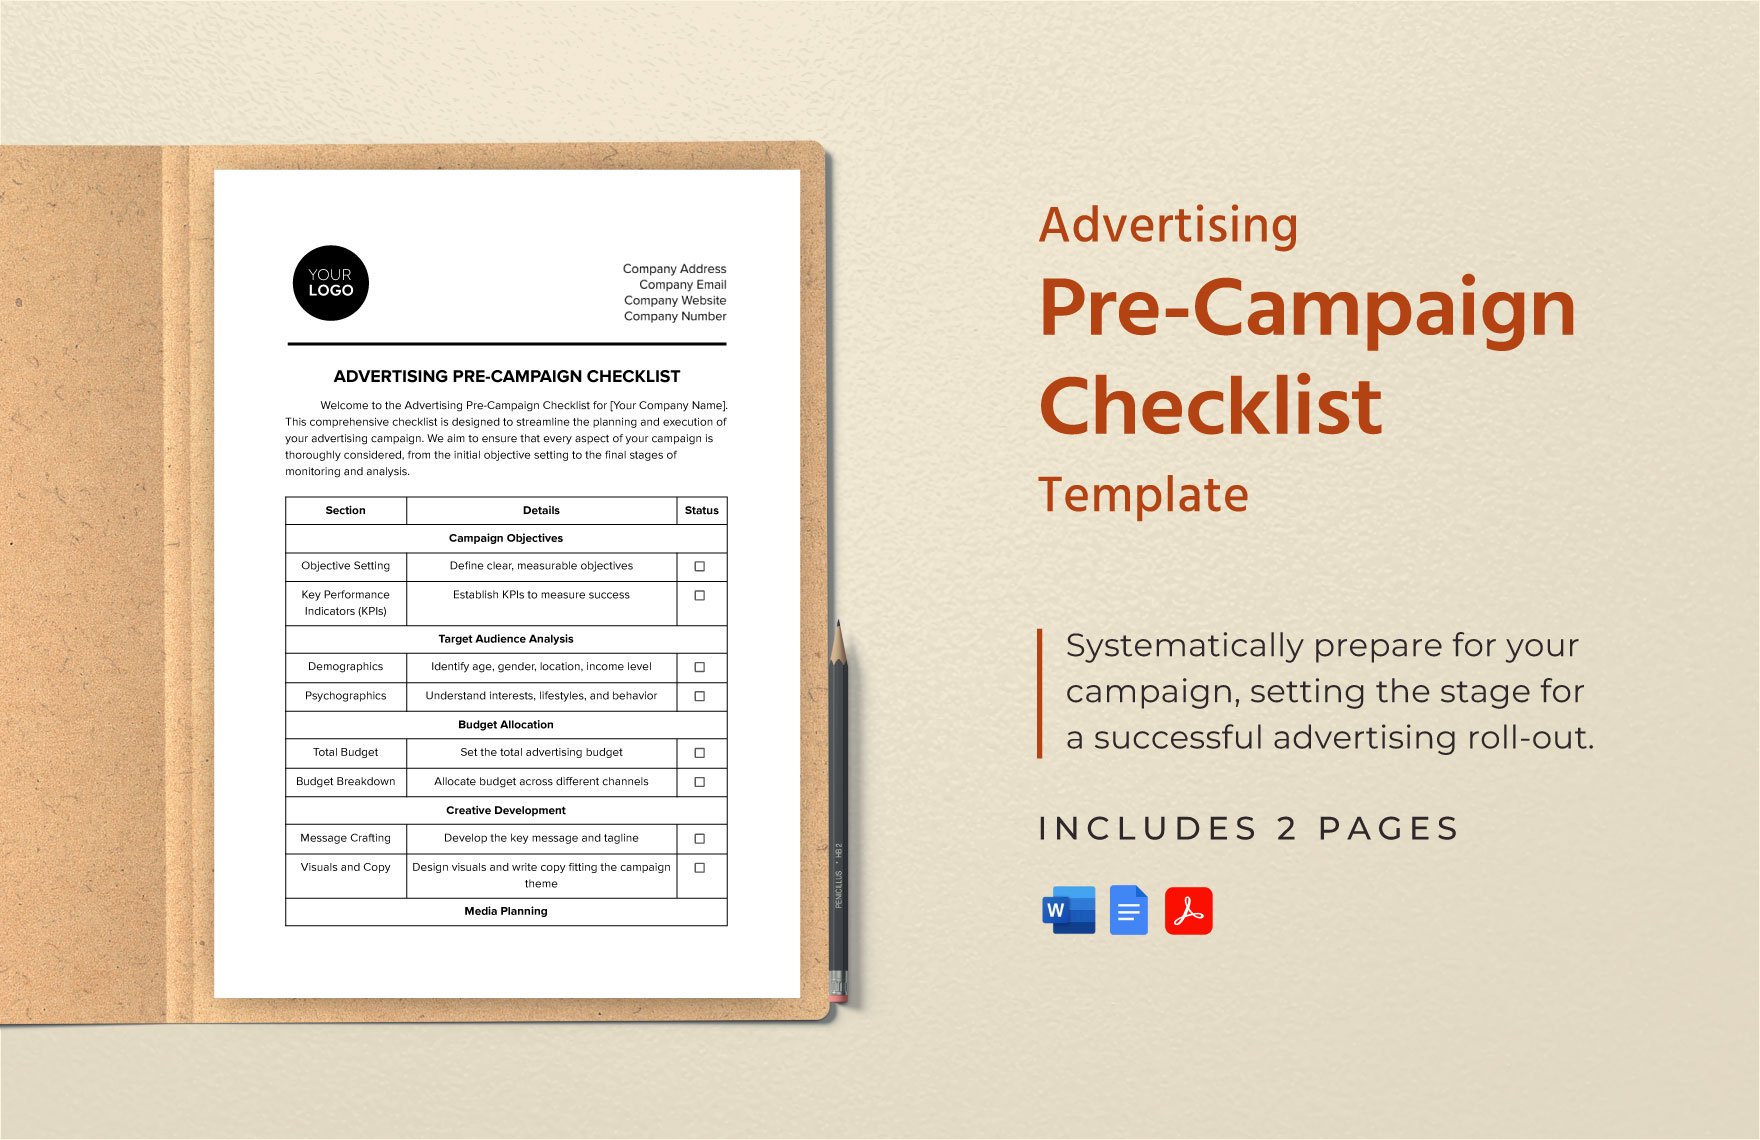 Advertising Pre-Campaign Checklist Template